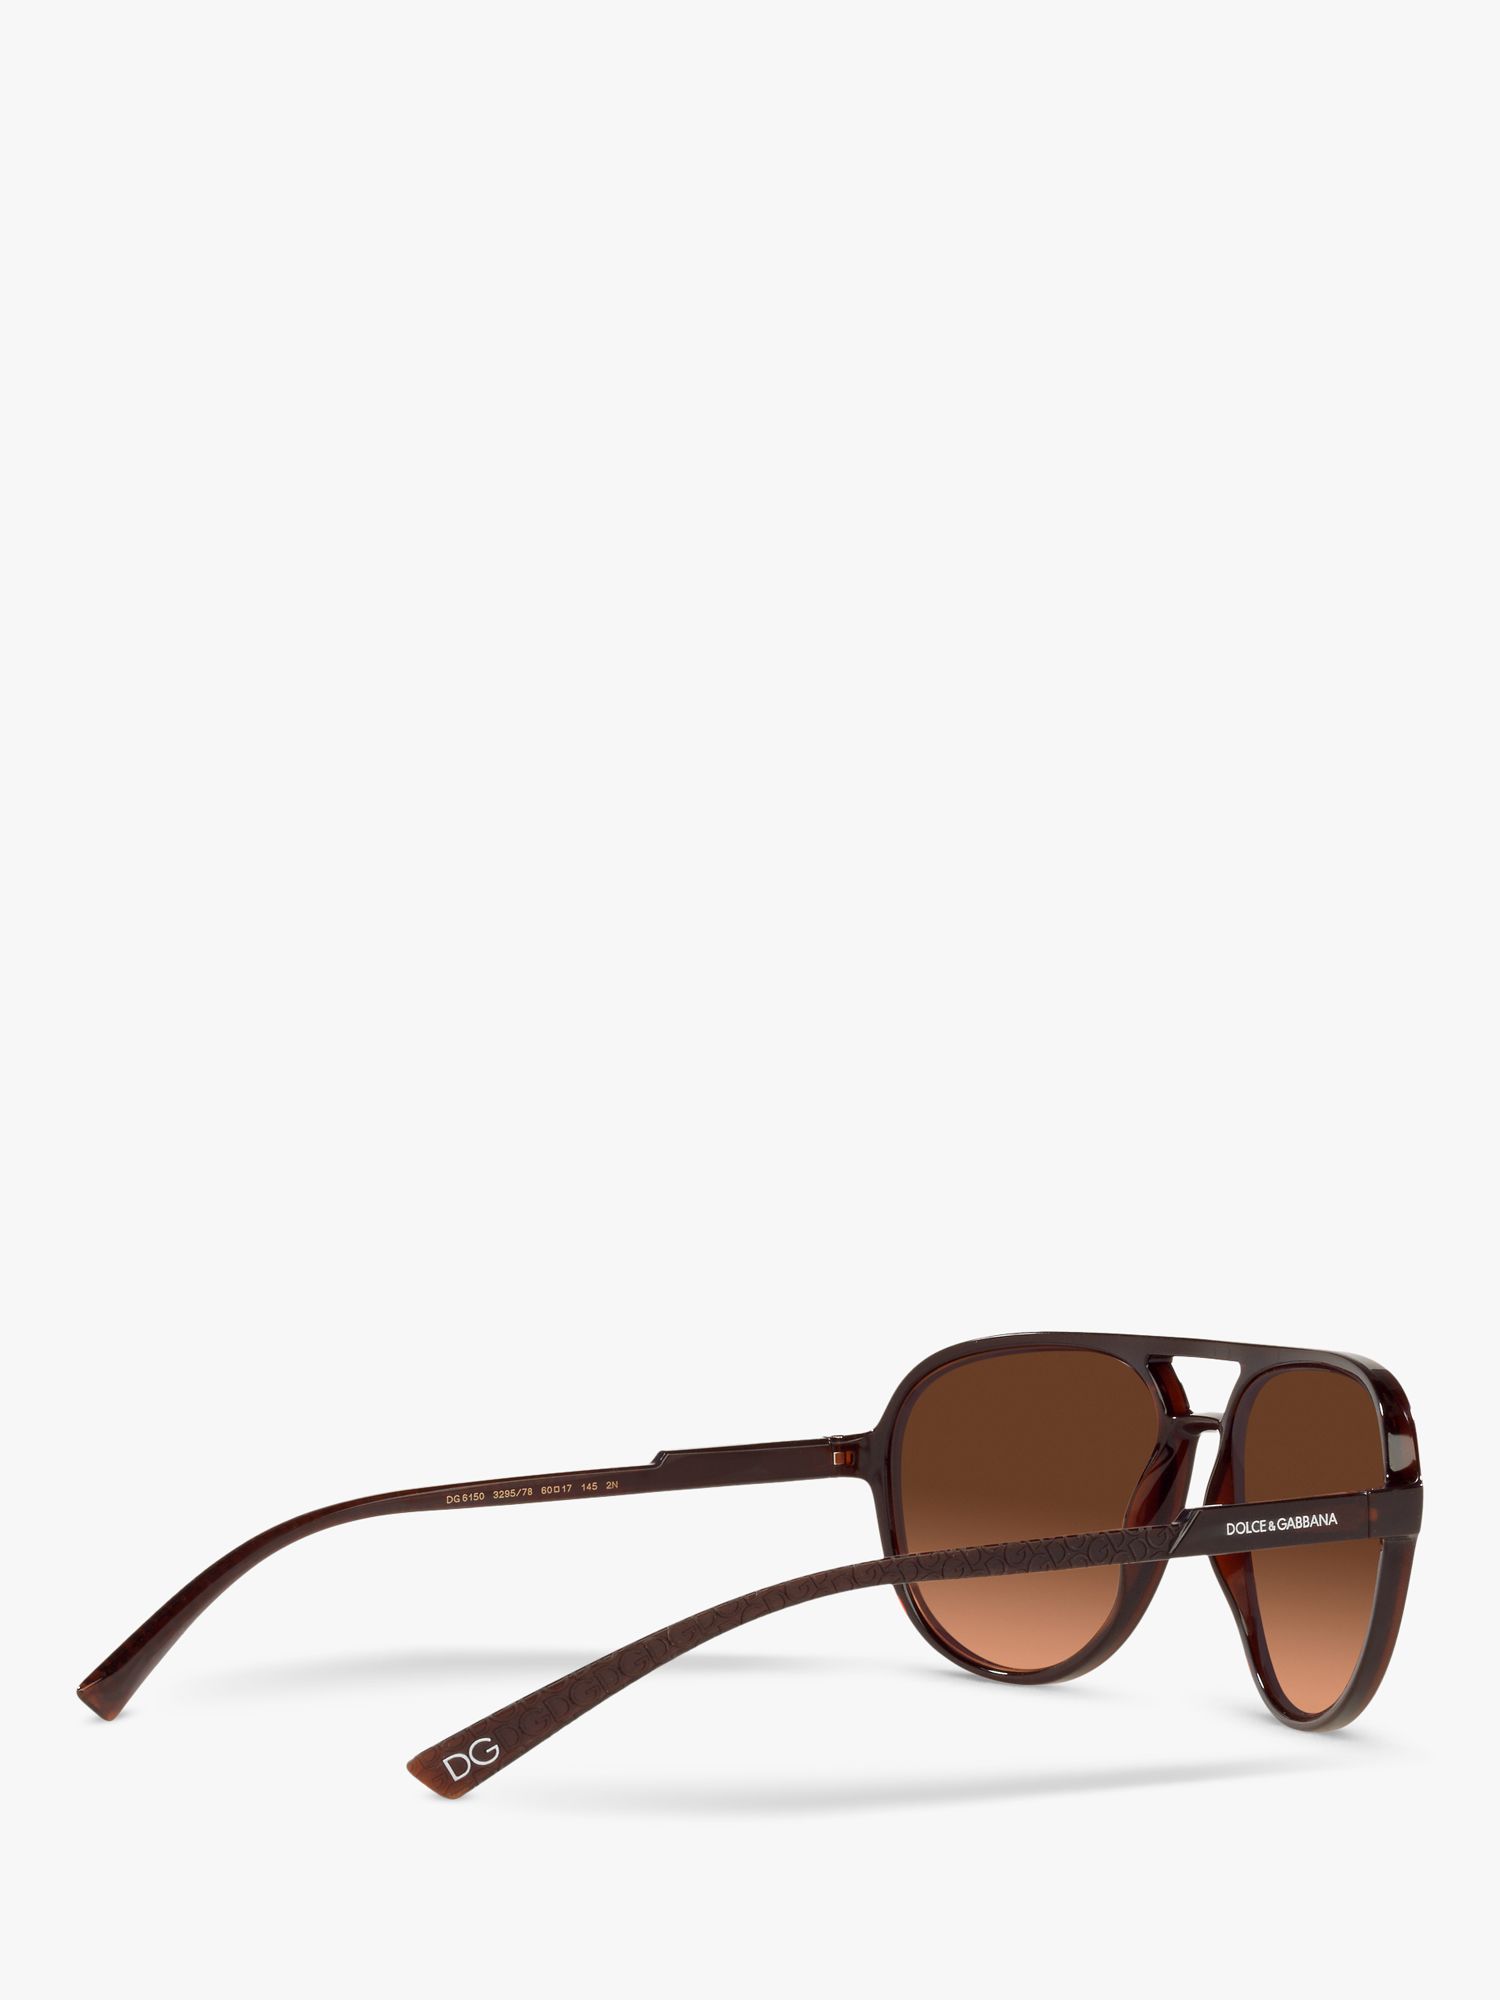 Dolce & Gabbana DG6150 Men's Aviator Sunglasses, Matte Brown/Brown ...